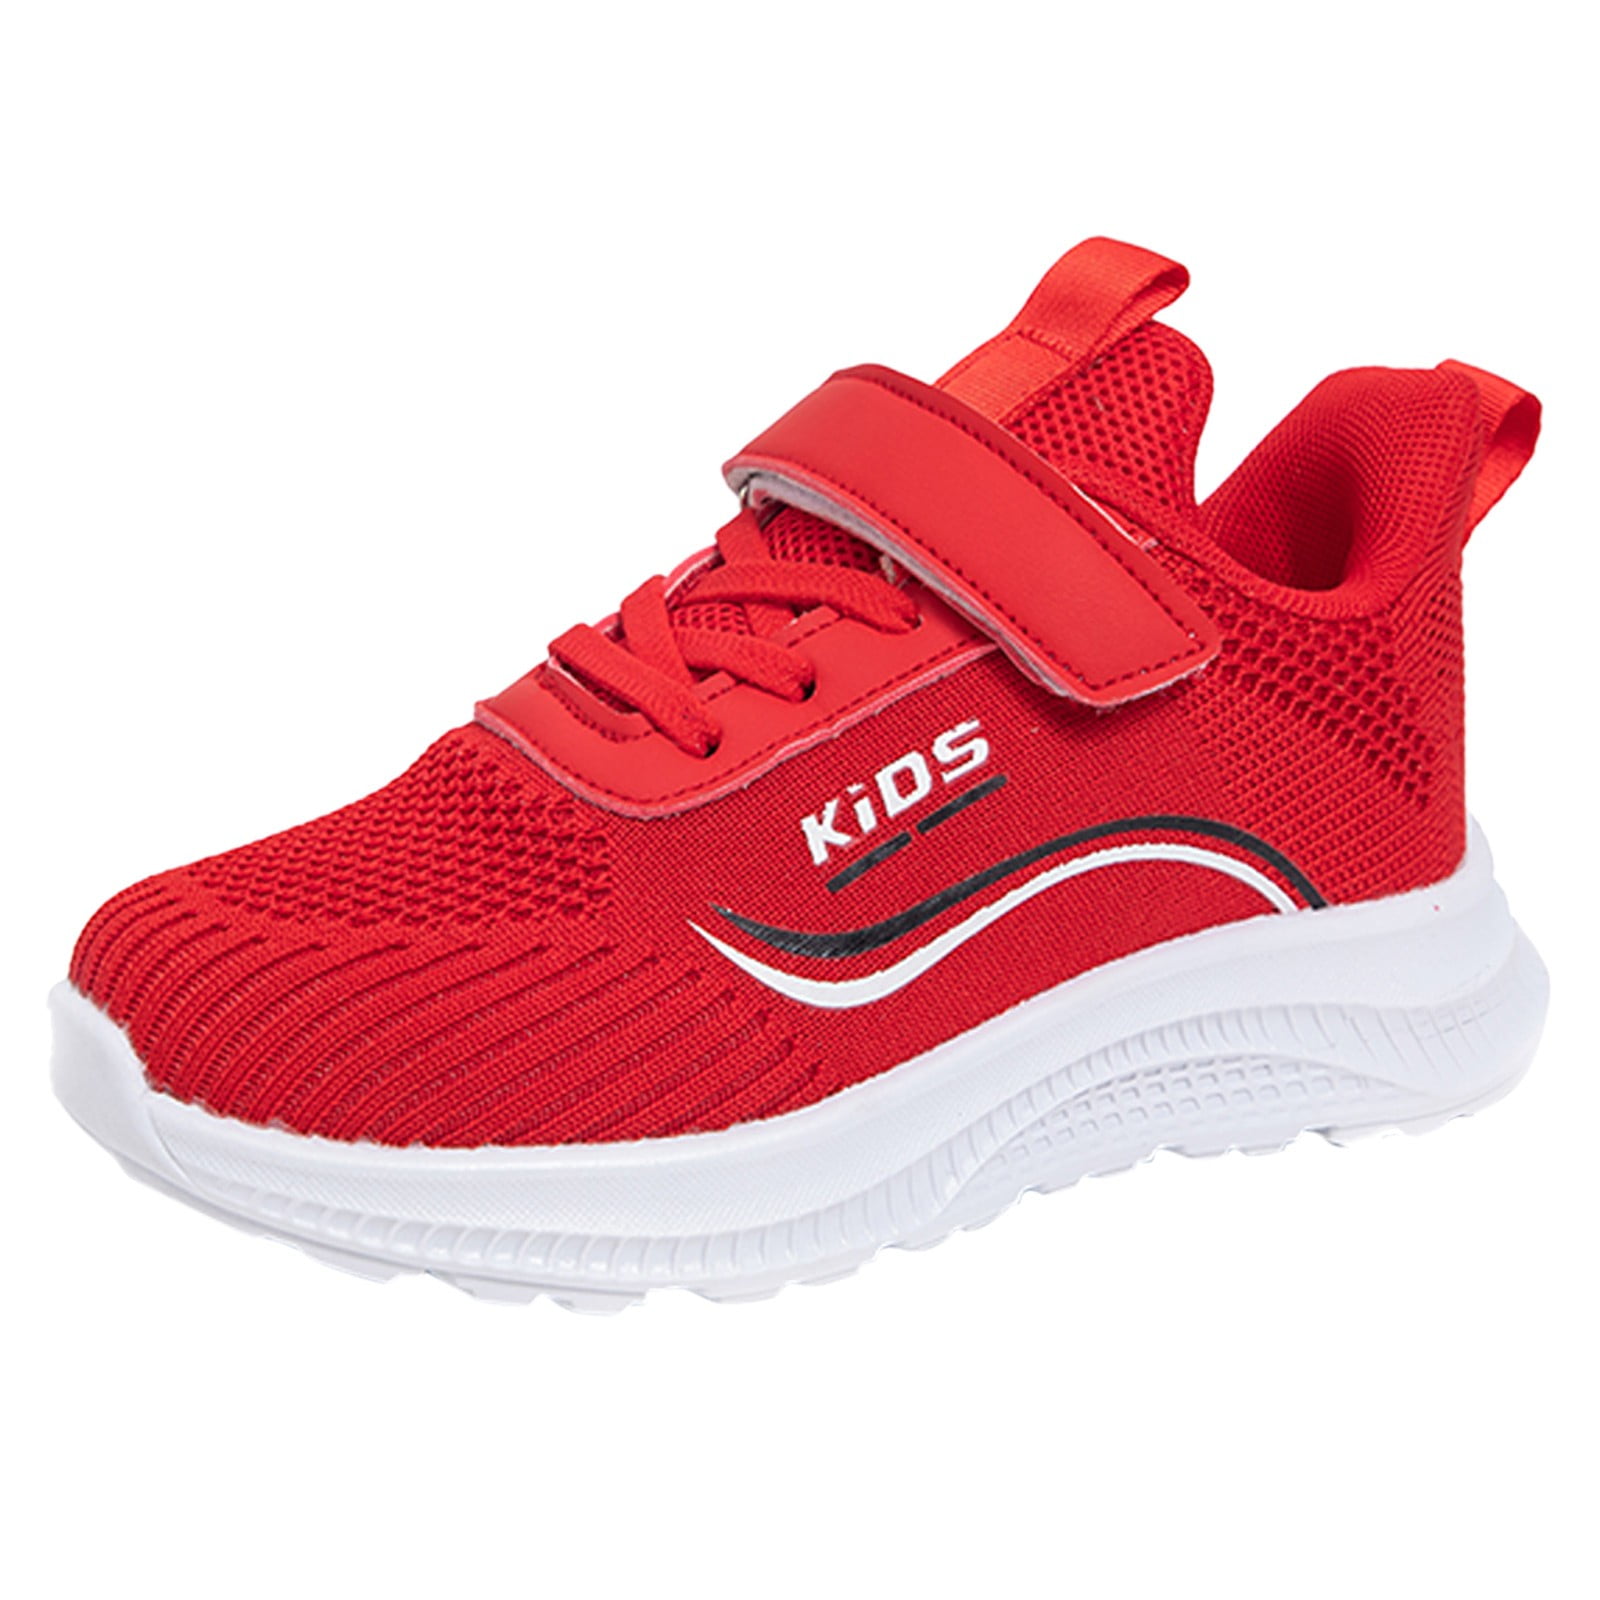 JDEFEG Shoes for Kids Toddler Kids Big Kids Boys Girls Walking